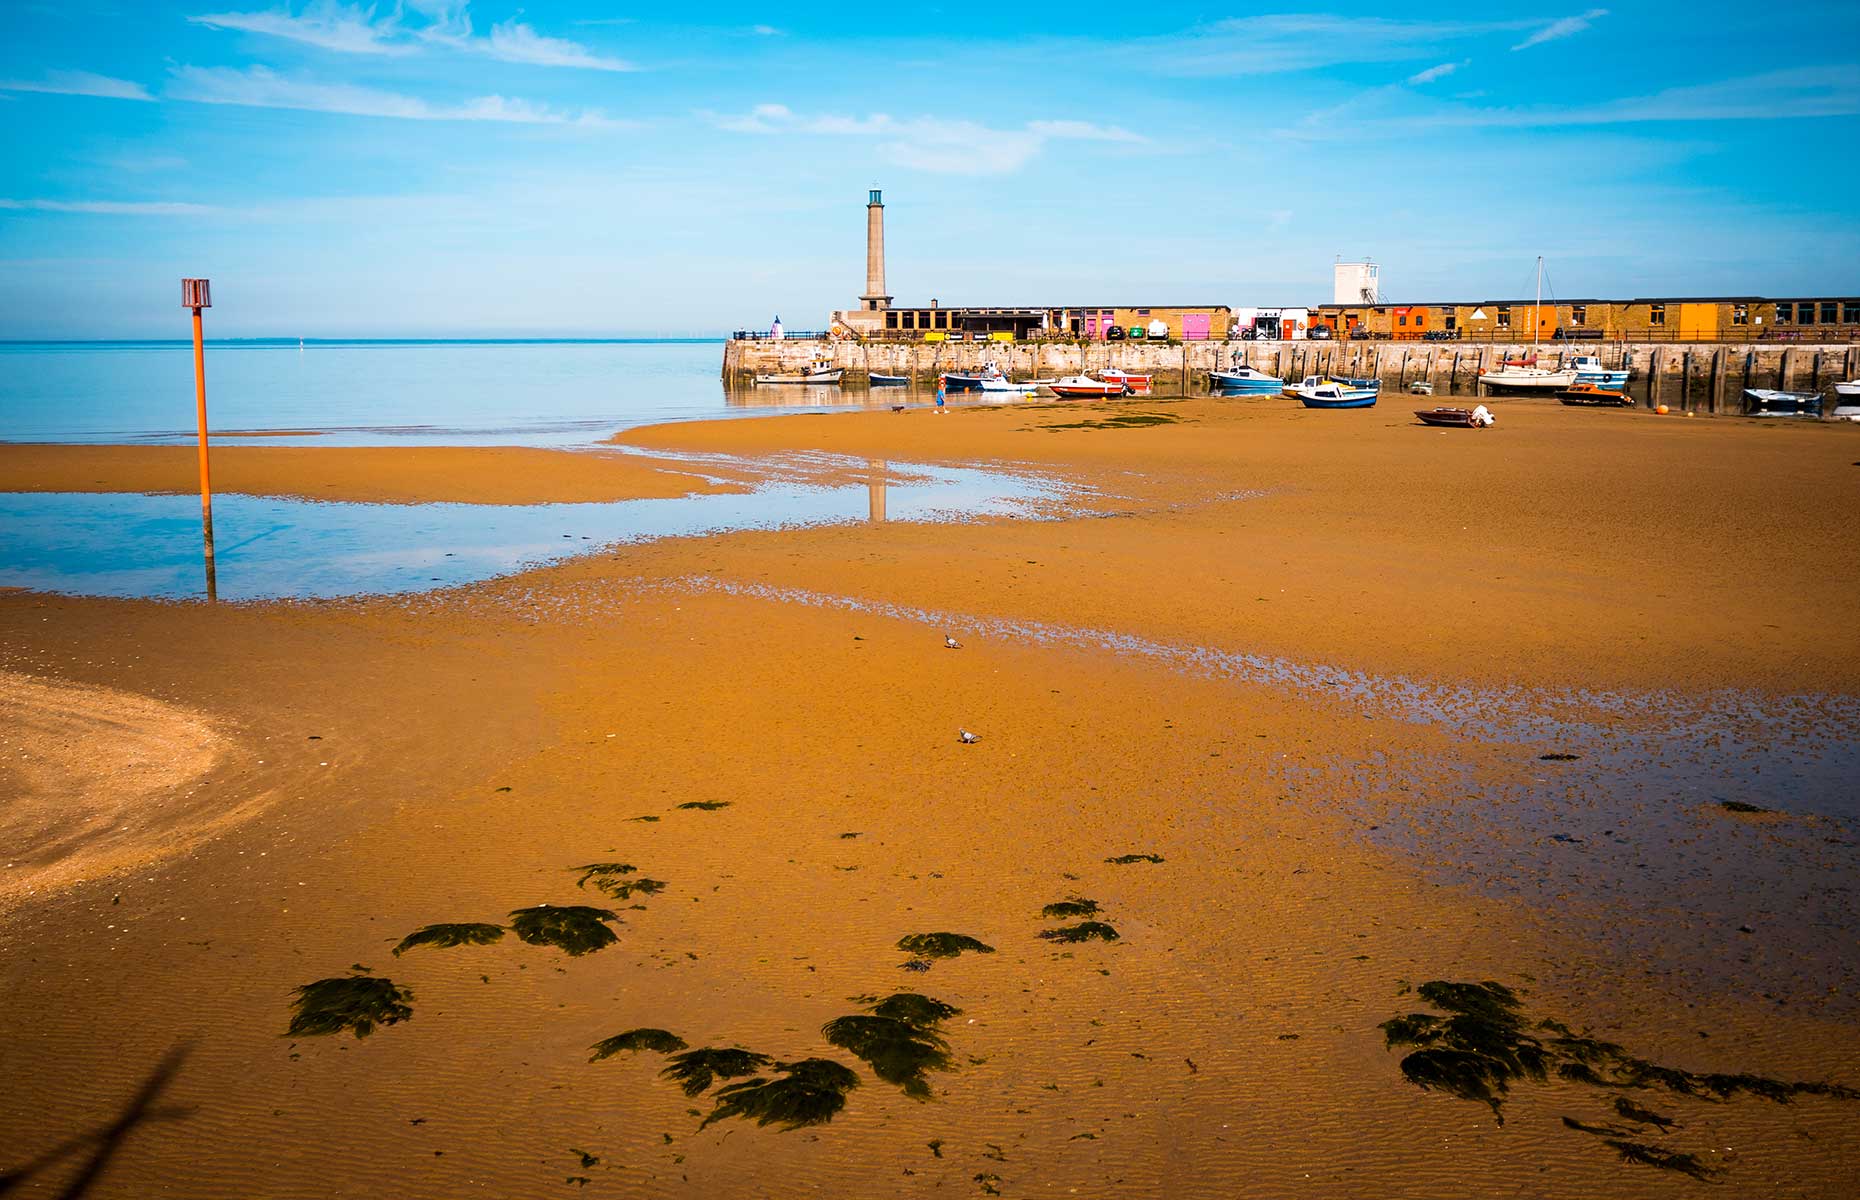 Margate's central beach (Image: Lenscap Photography/Shutterstock)